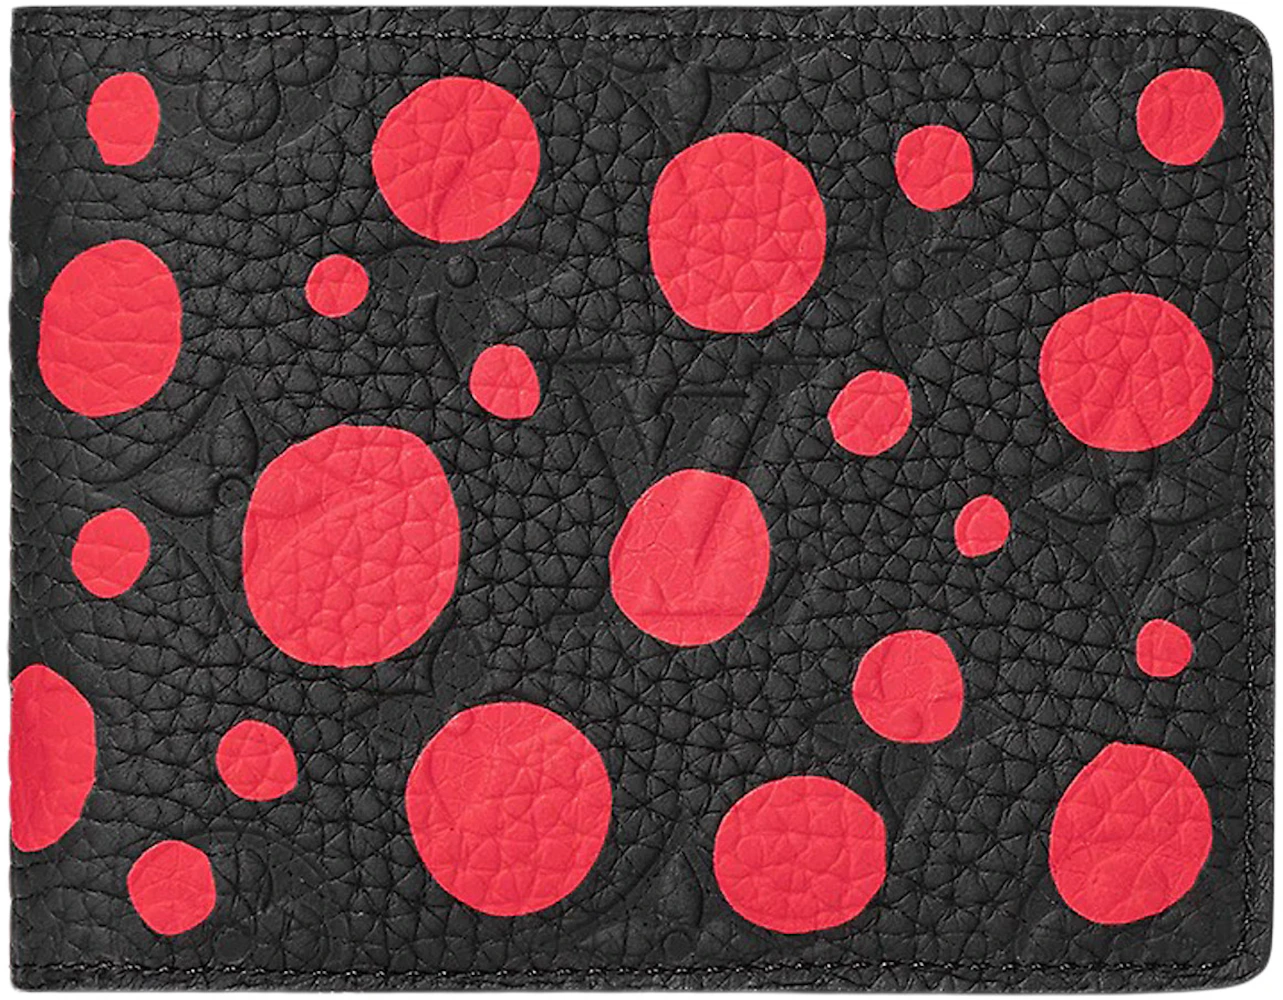 Louis Vuitton x Yayoi Kusama Slender Wallet Black/Red in Taurillon